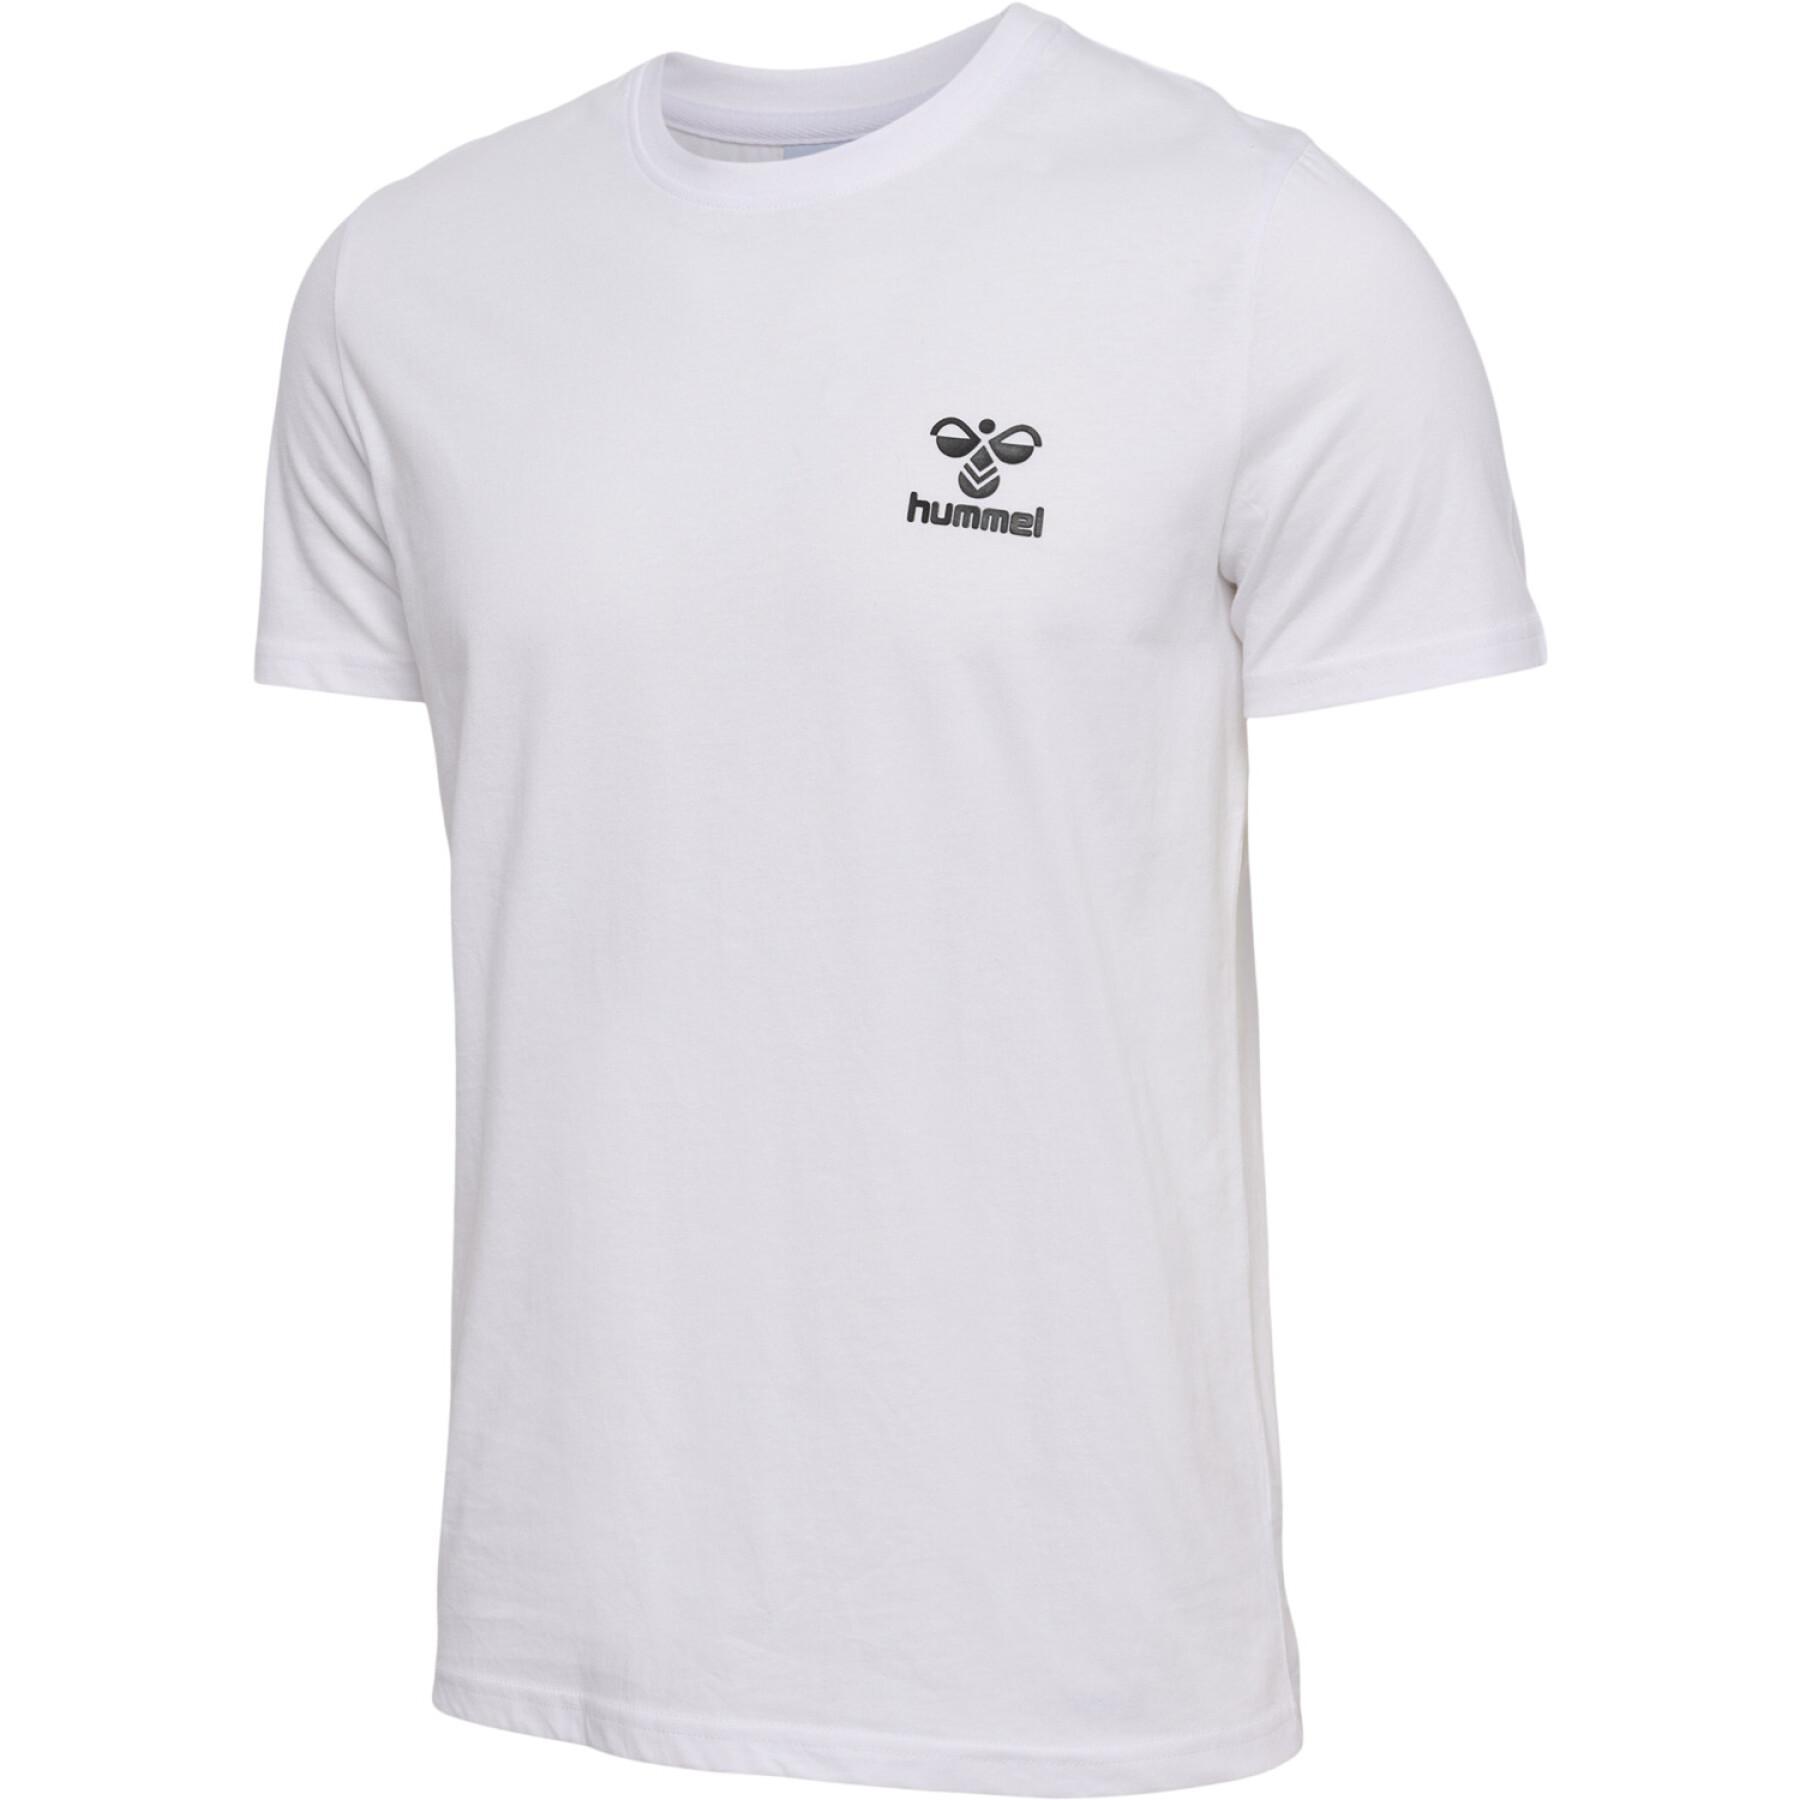 T-shirt Hummel Icons - - Hummel Lifestyle - Brands